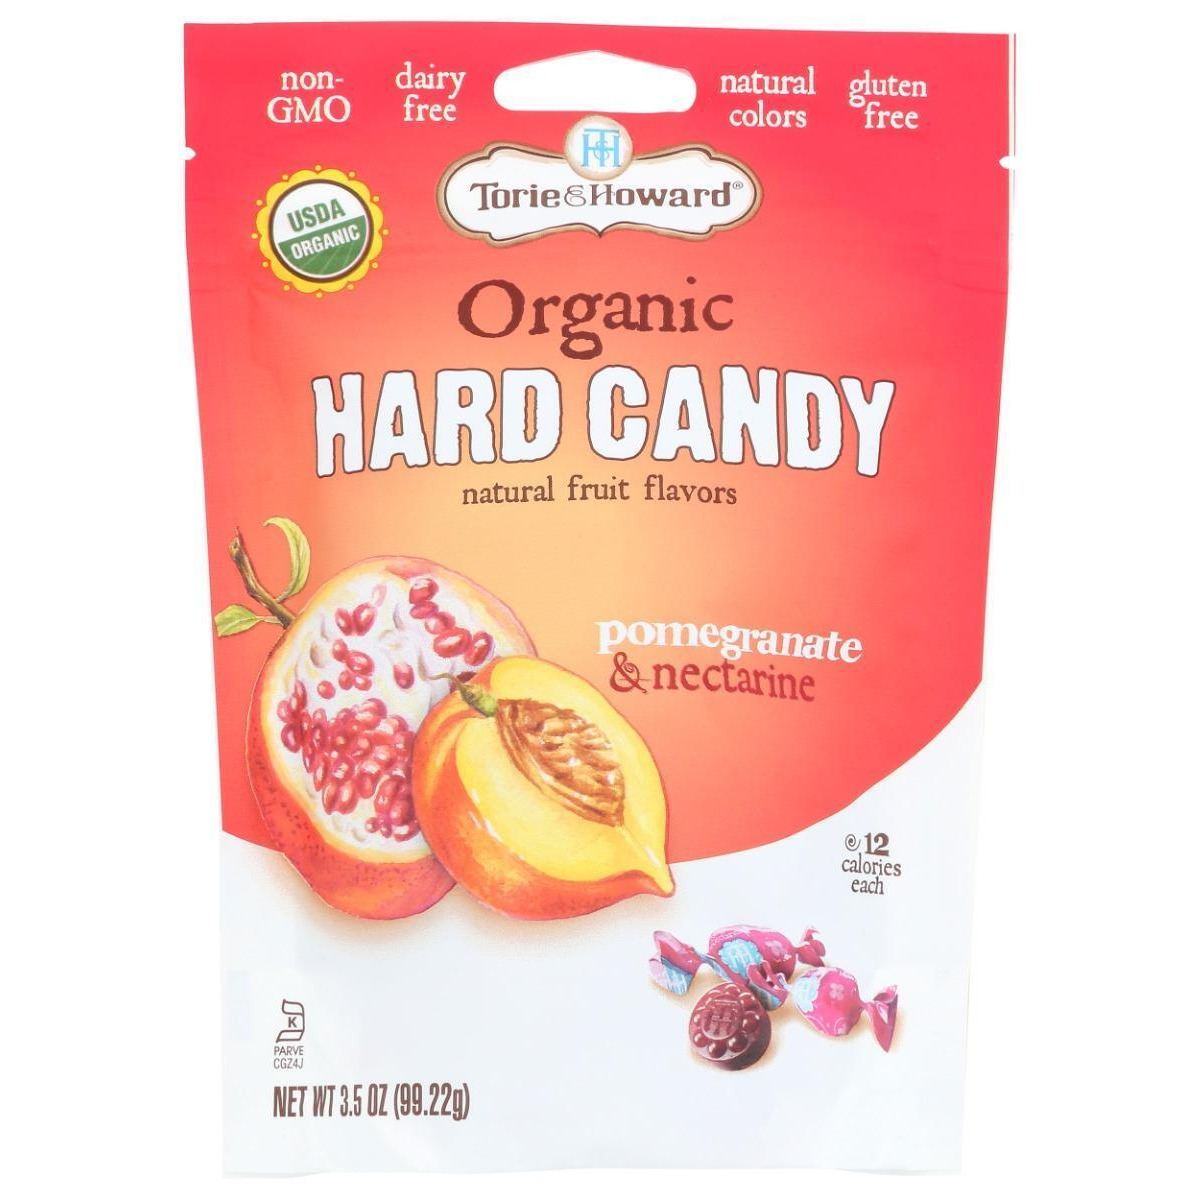 Torie & Howard KHCH02203269 3.5 oz Pomegranate & Nectarine Hard Candy